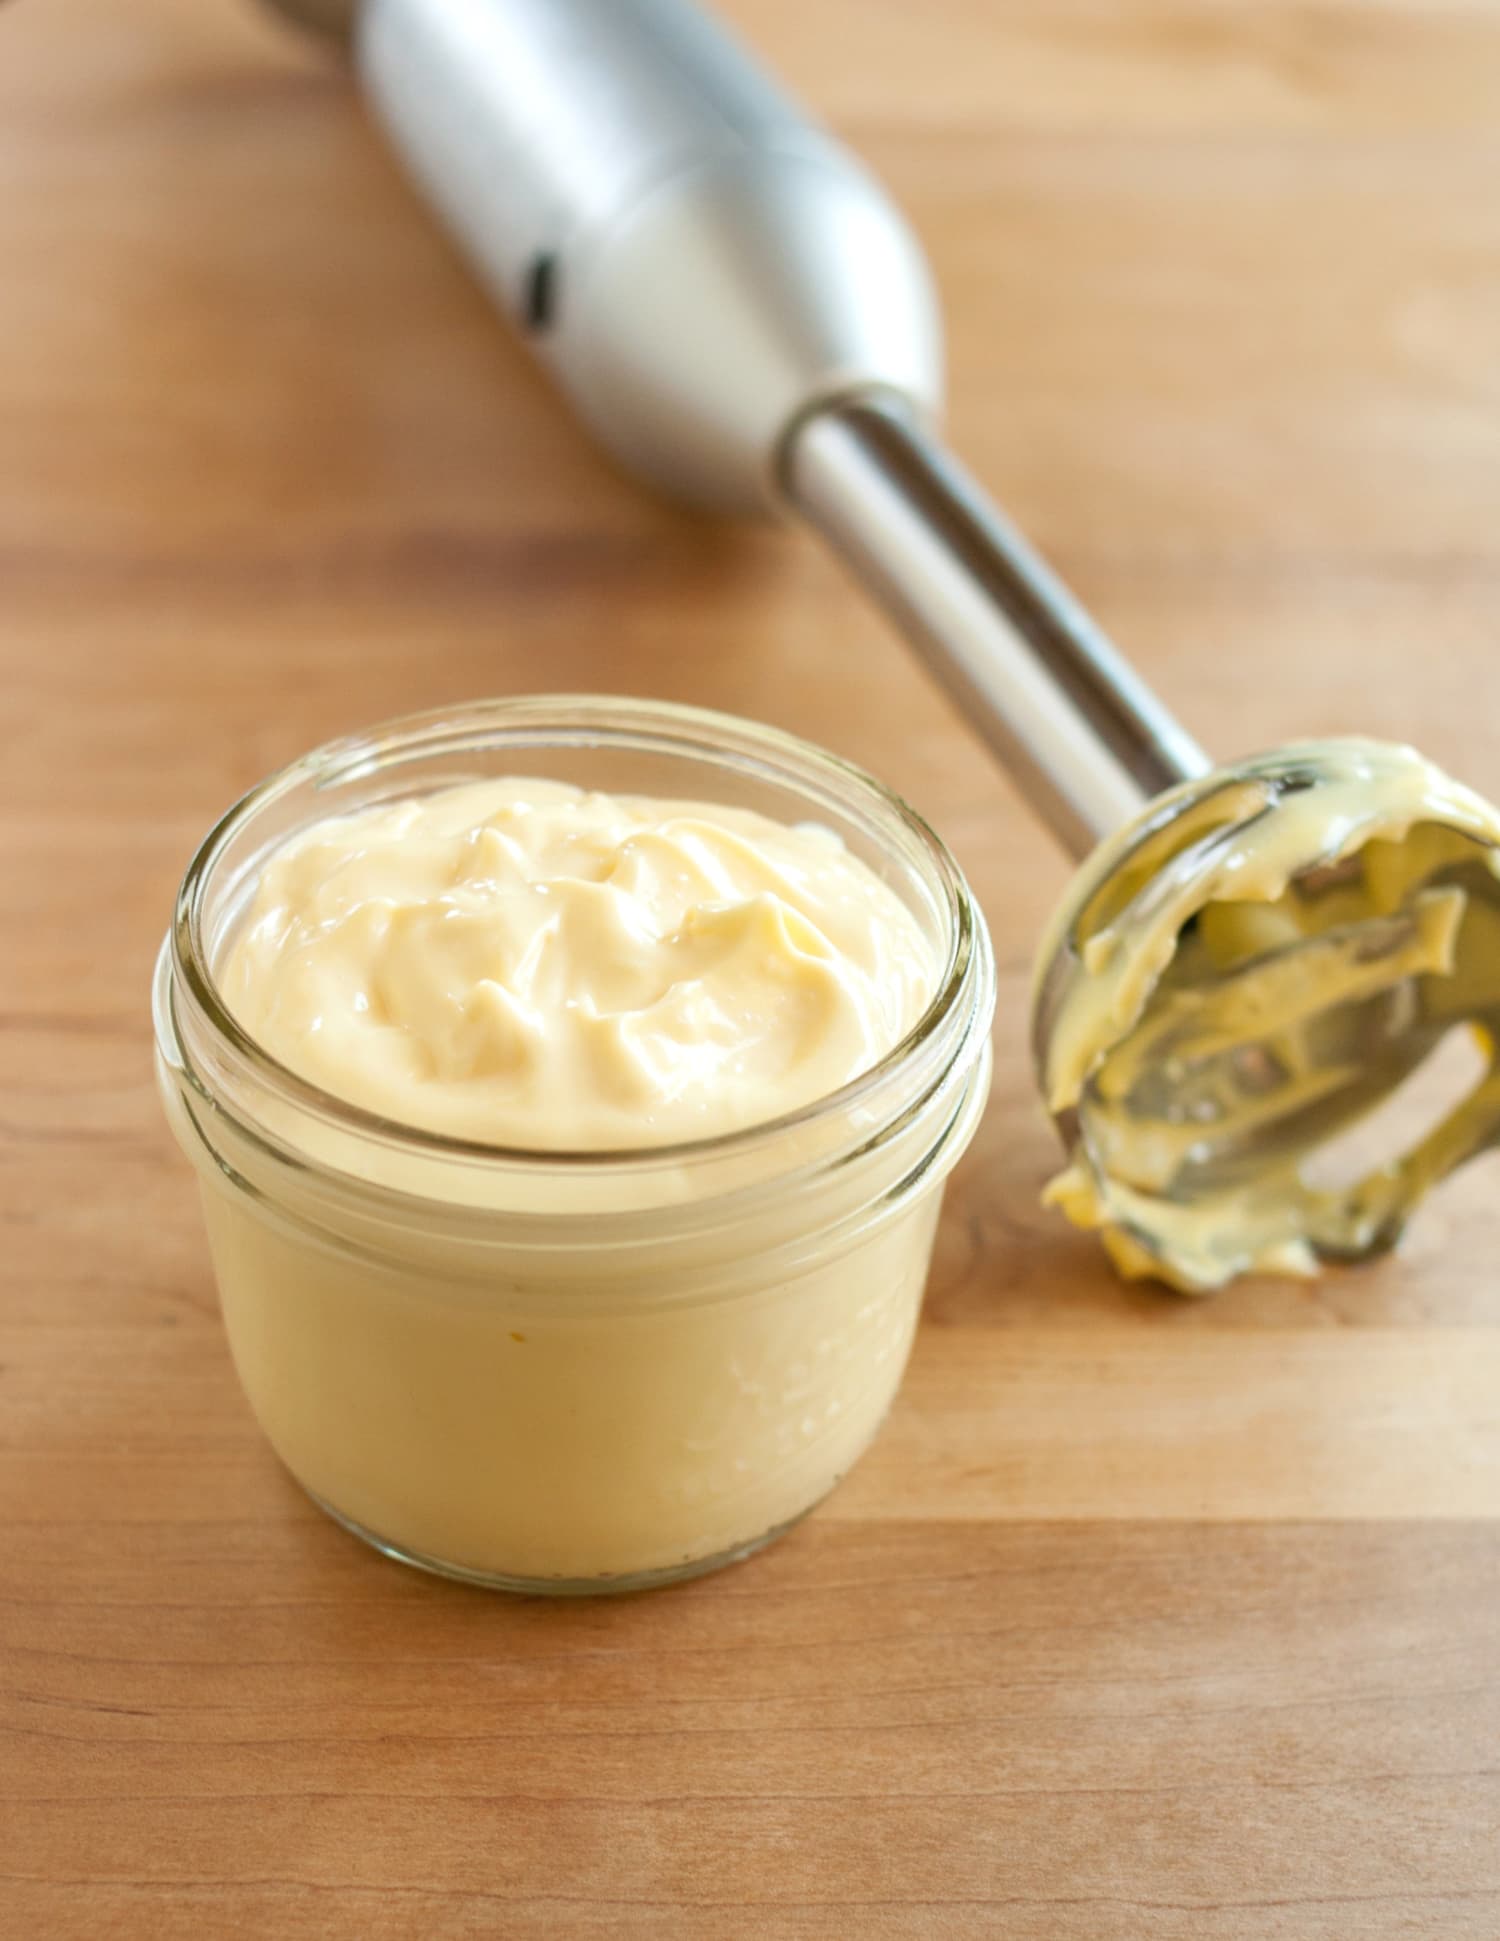 making mayo with emulsion blender